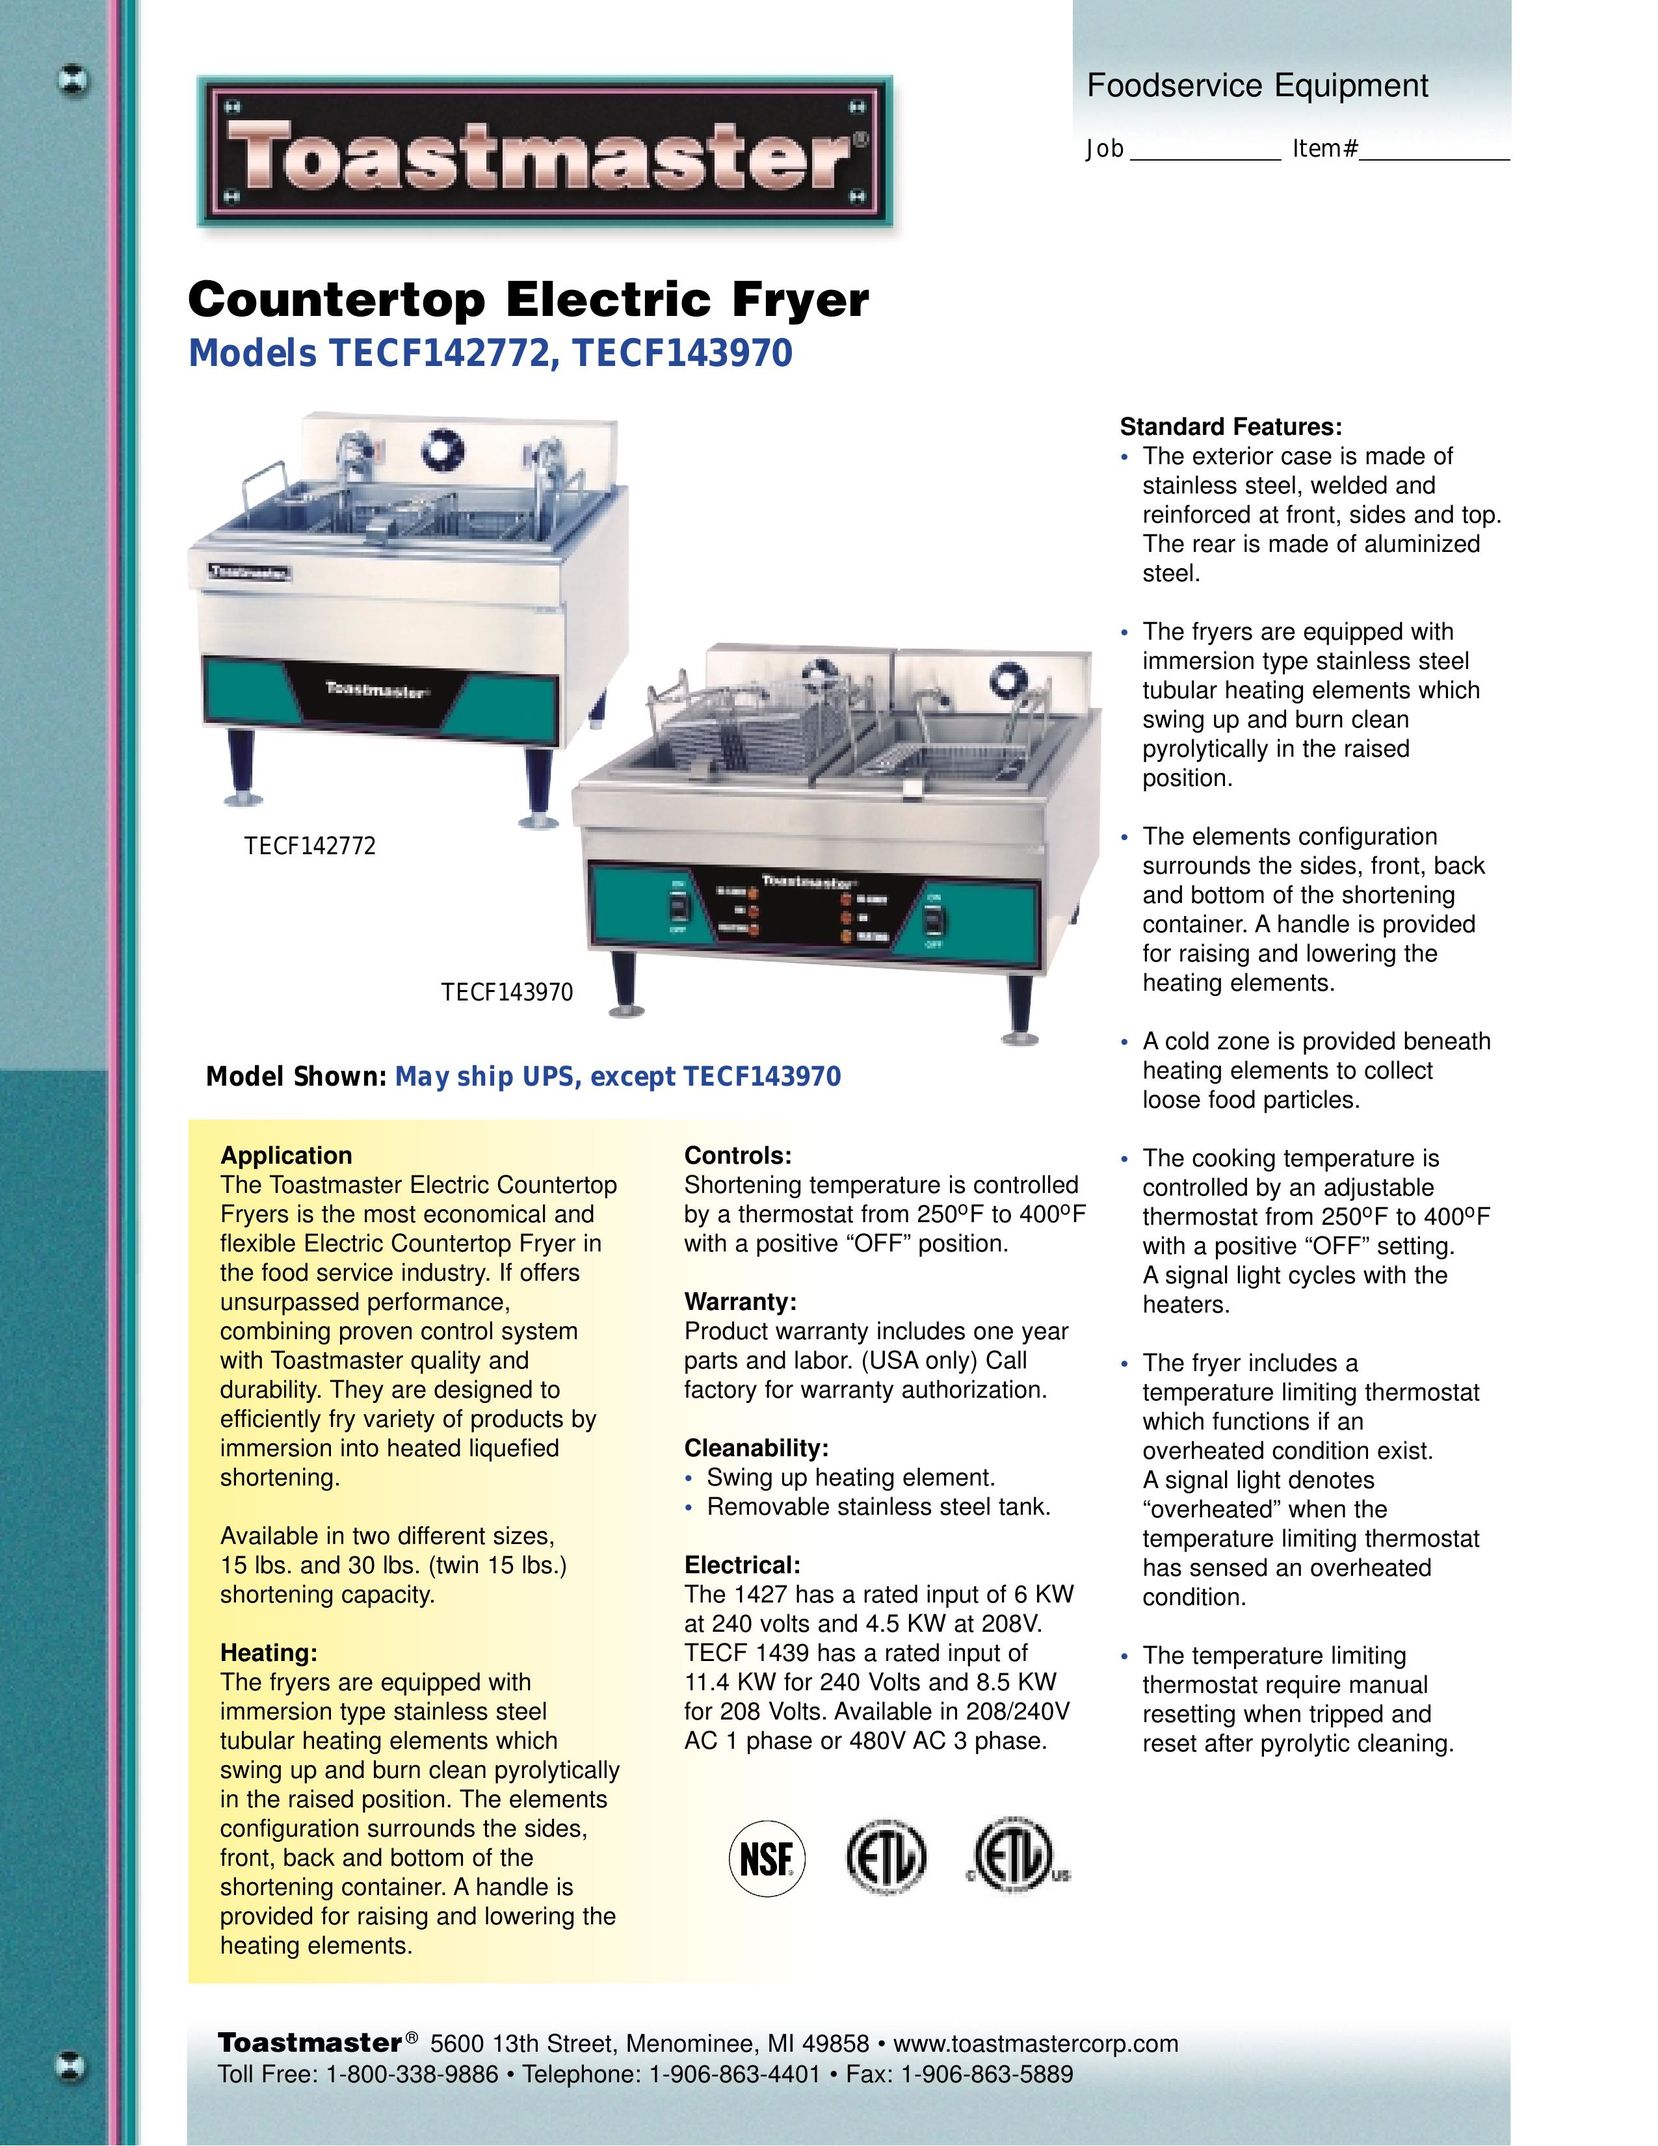 Toastmaster TECF143970 Fryer User Manual